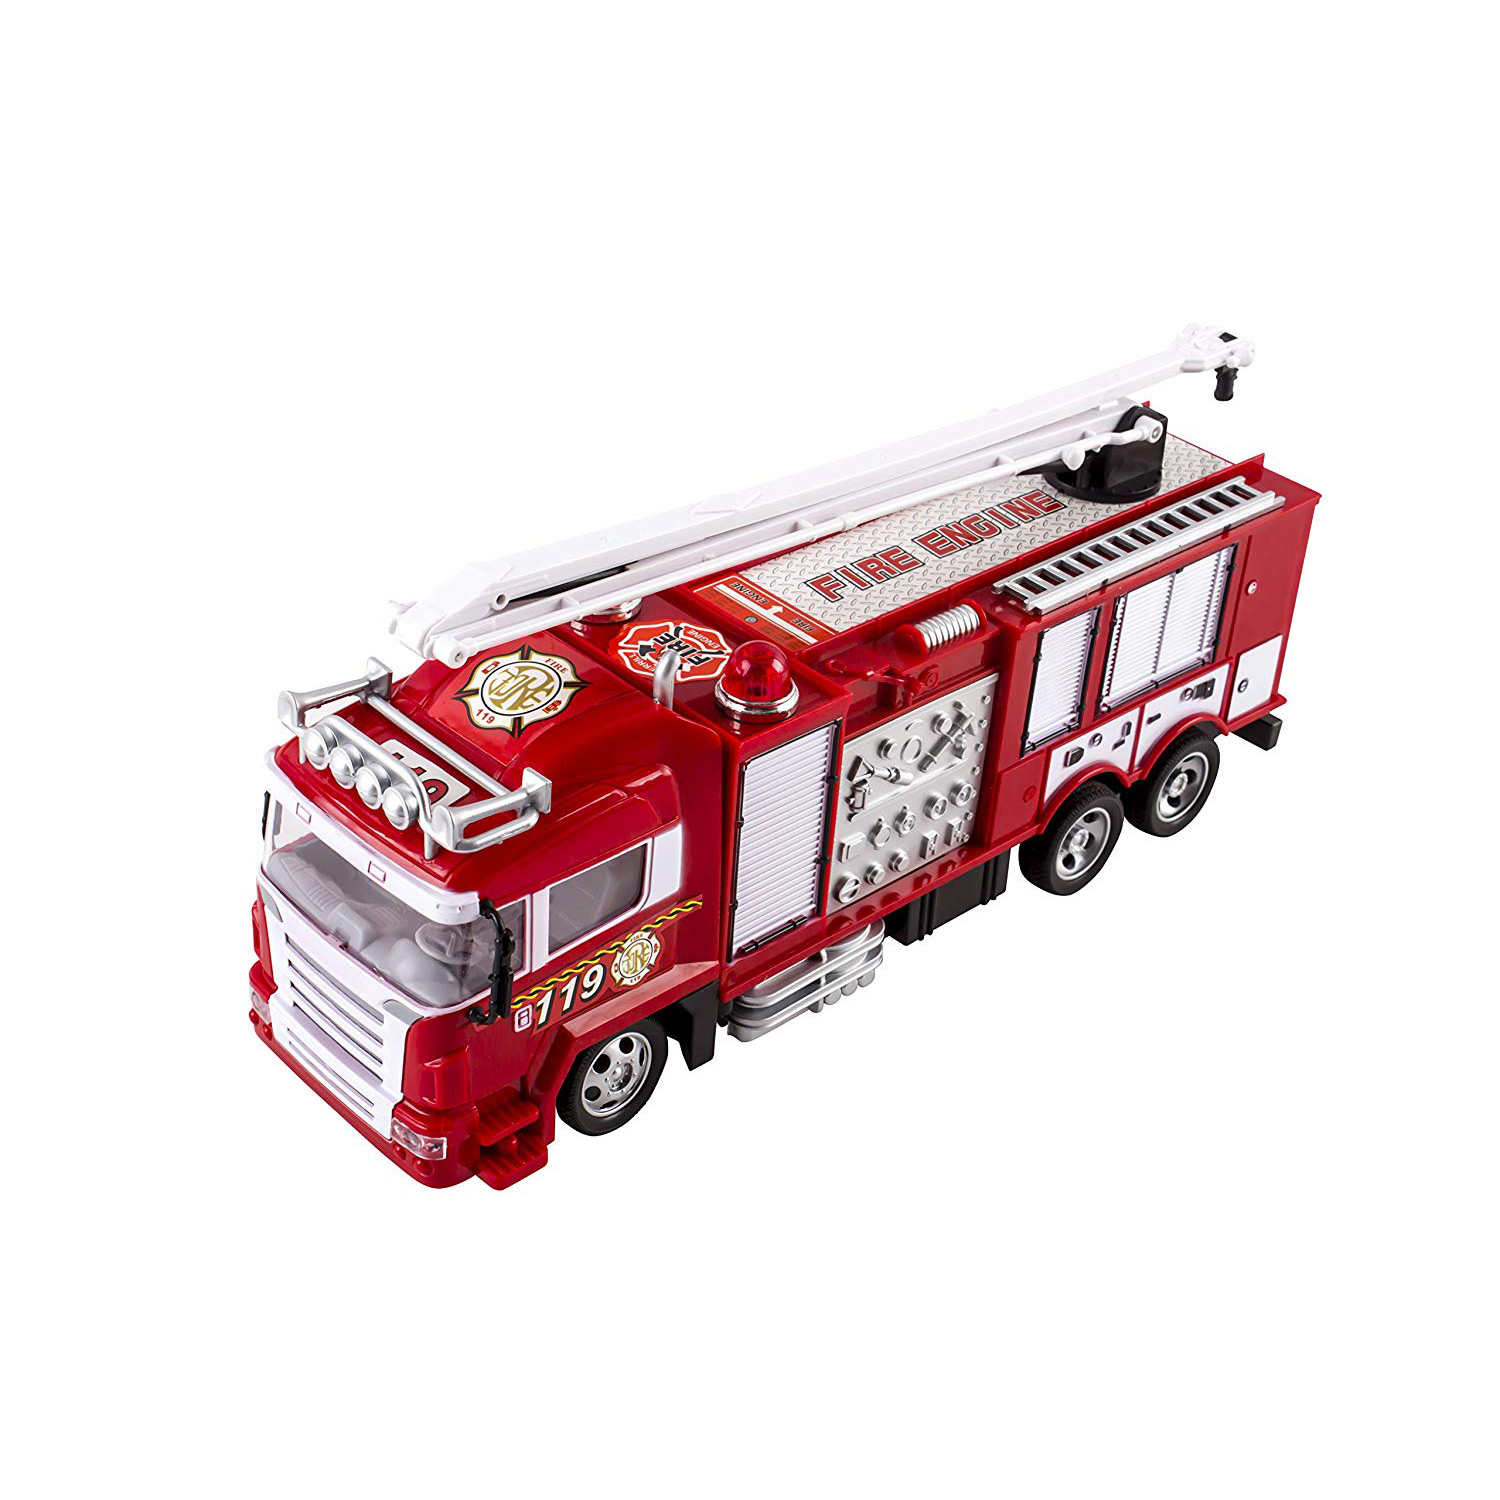 Toy full. Пожарная машина на пульте. Fire Truck игрушка. Пожарные машины игрушки на пульте. Пожарная машина игрушка на пульте управления.